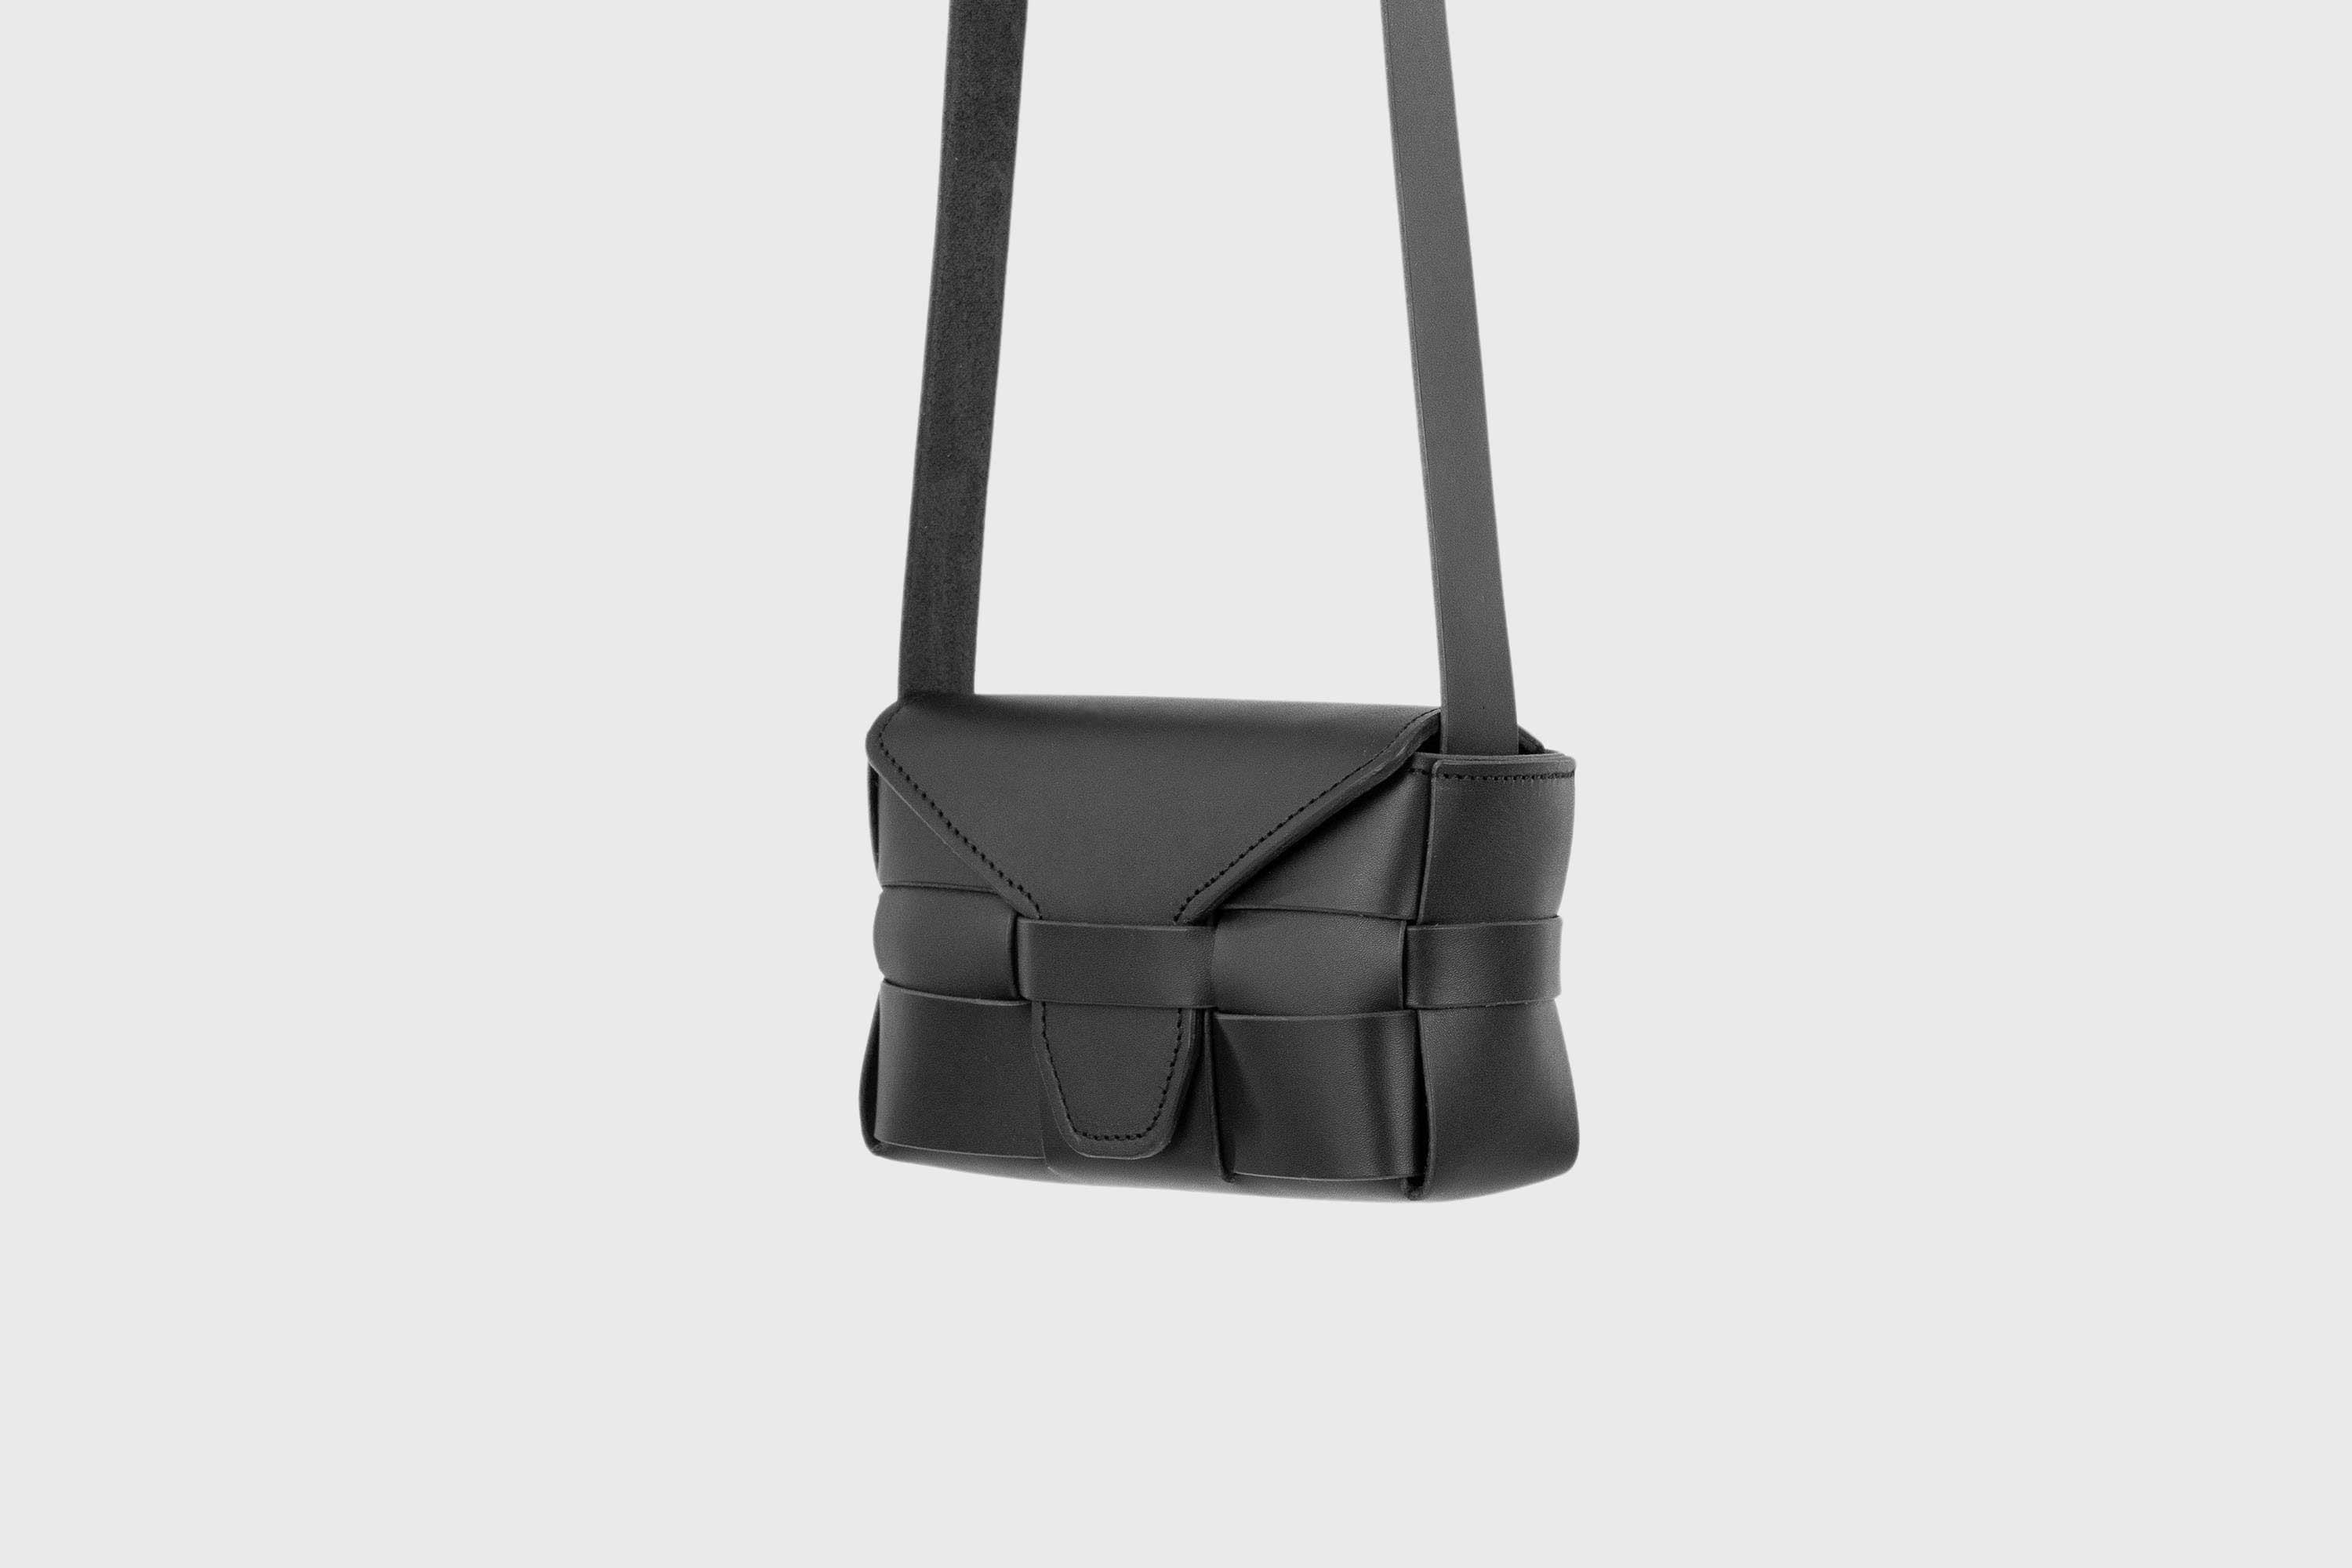 Woven Leather Handbag Black Braided Shoulder Bag Crossbody Vegetable Tanned Premium Quality Modern Minimalistic Design Atelier Madre Manuel Dreesmann Barcelona